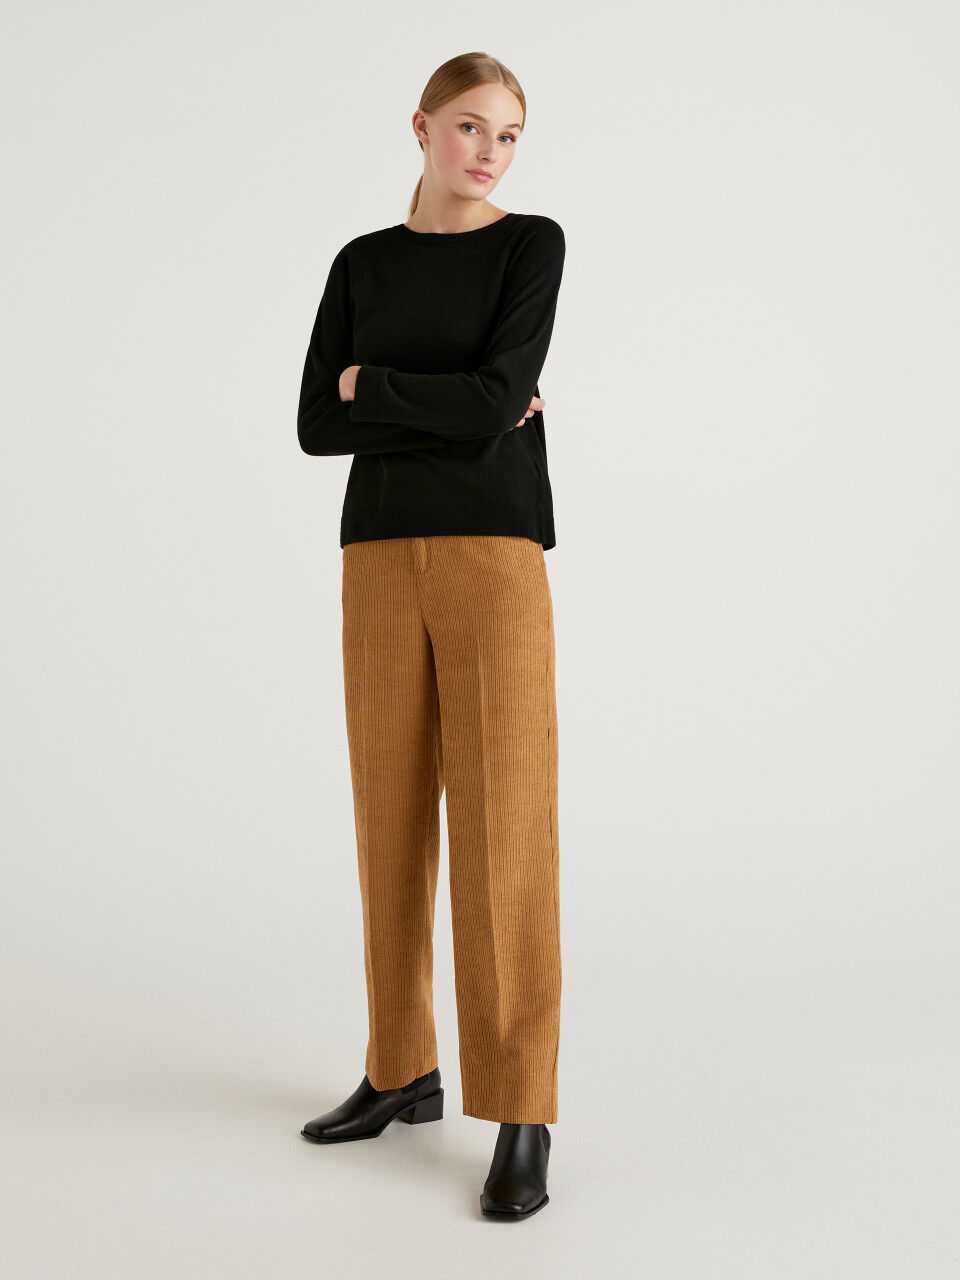 Buy Black Trousers  Pants for Women by SCOTCH  SODA Online  Ajiocom